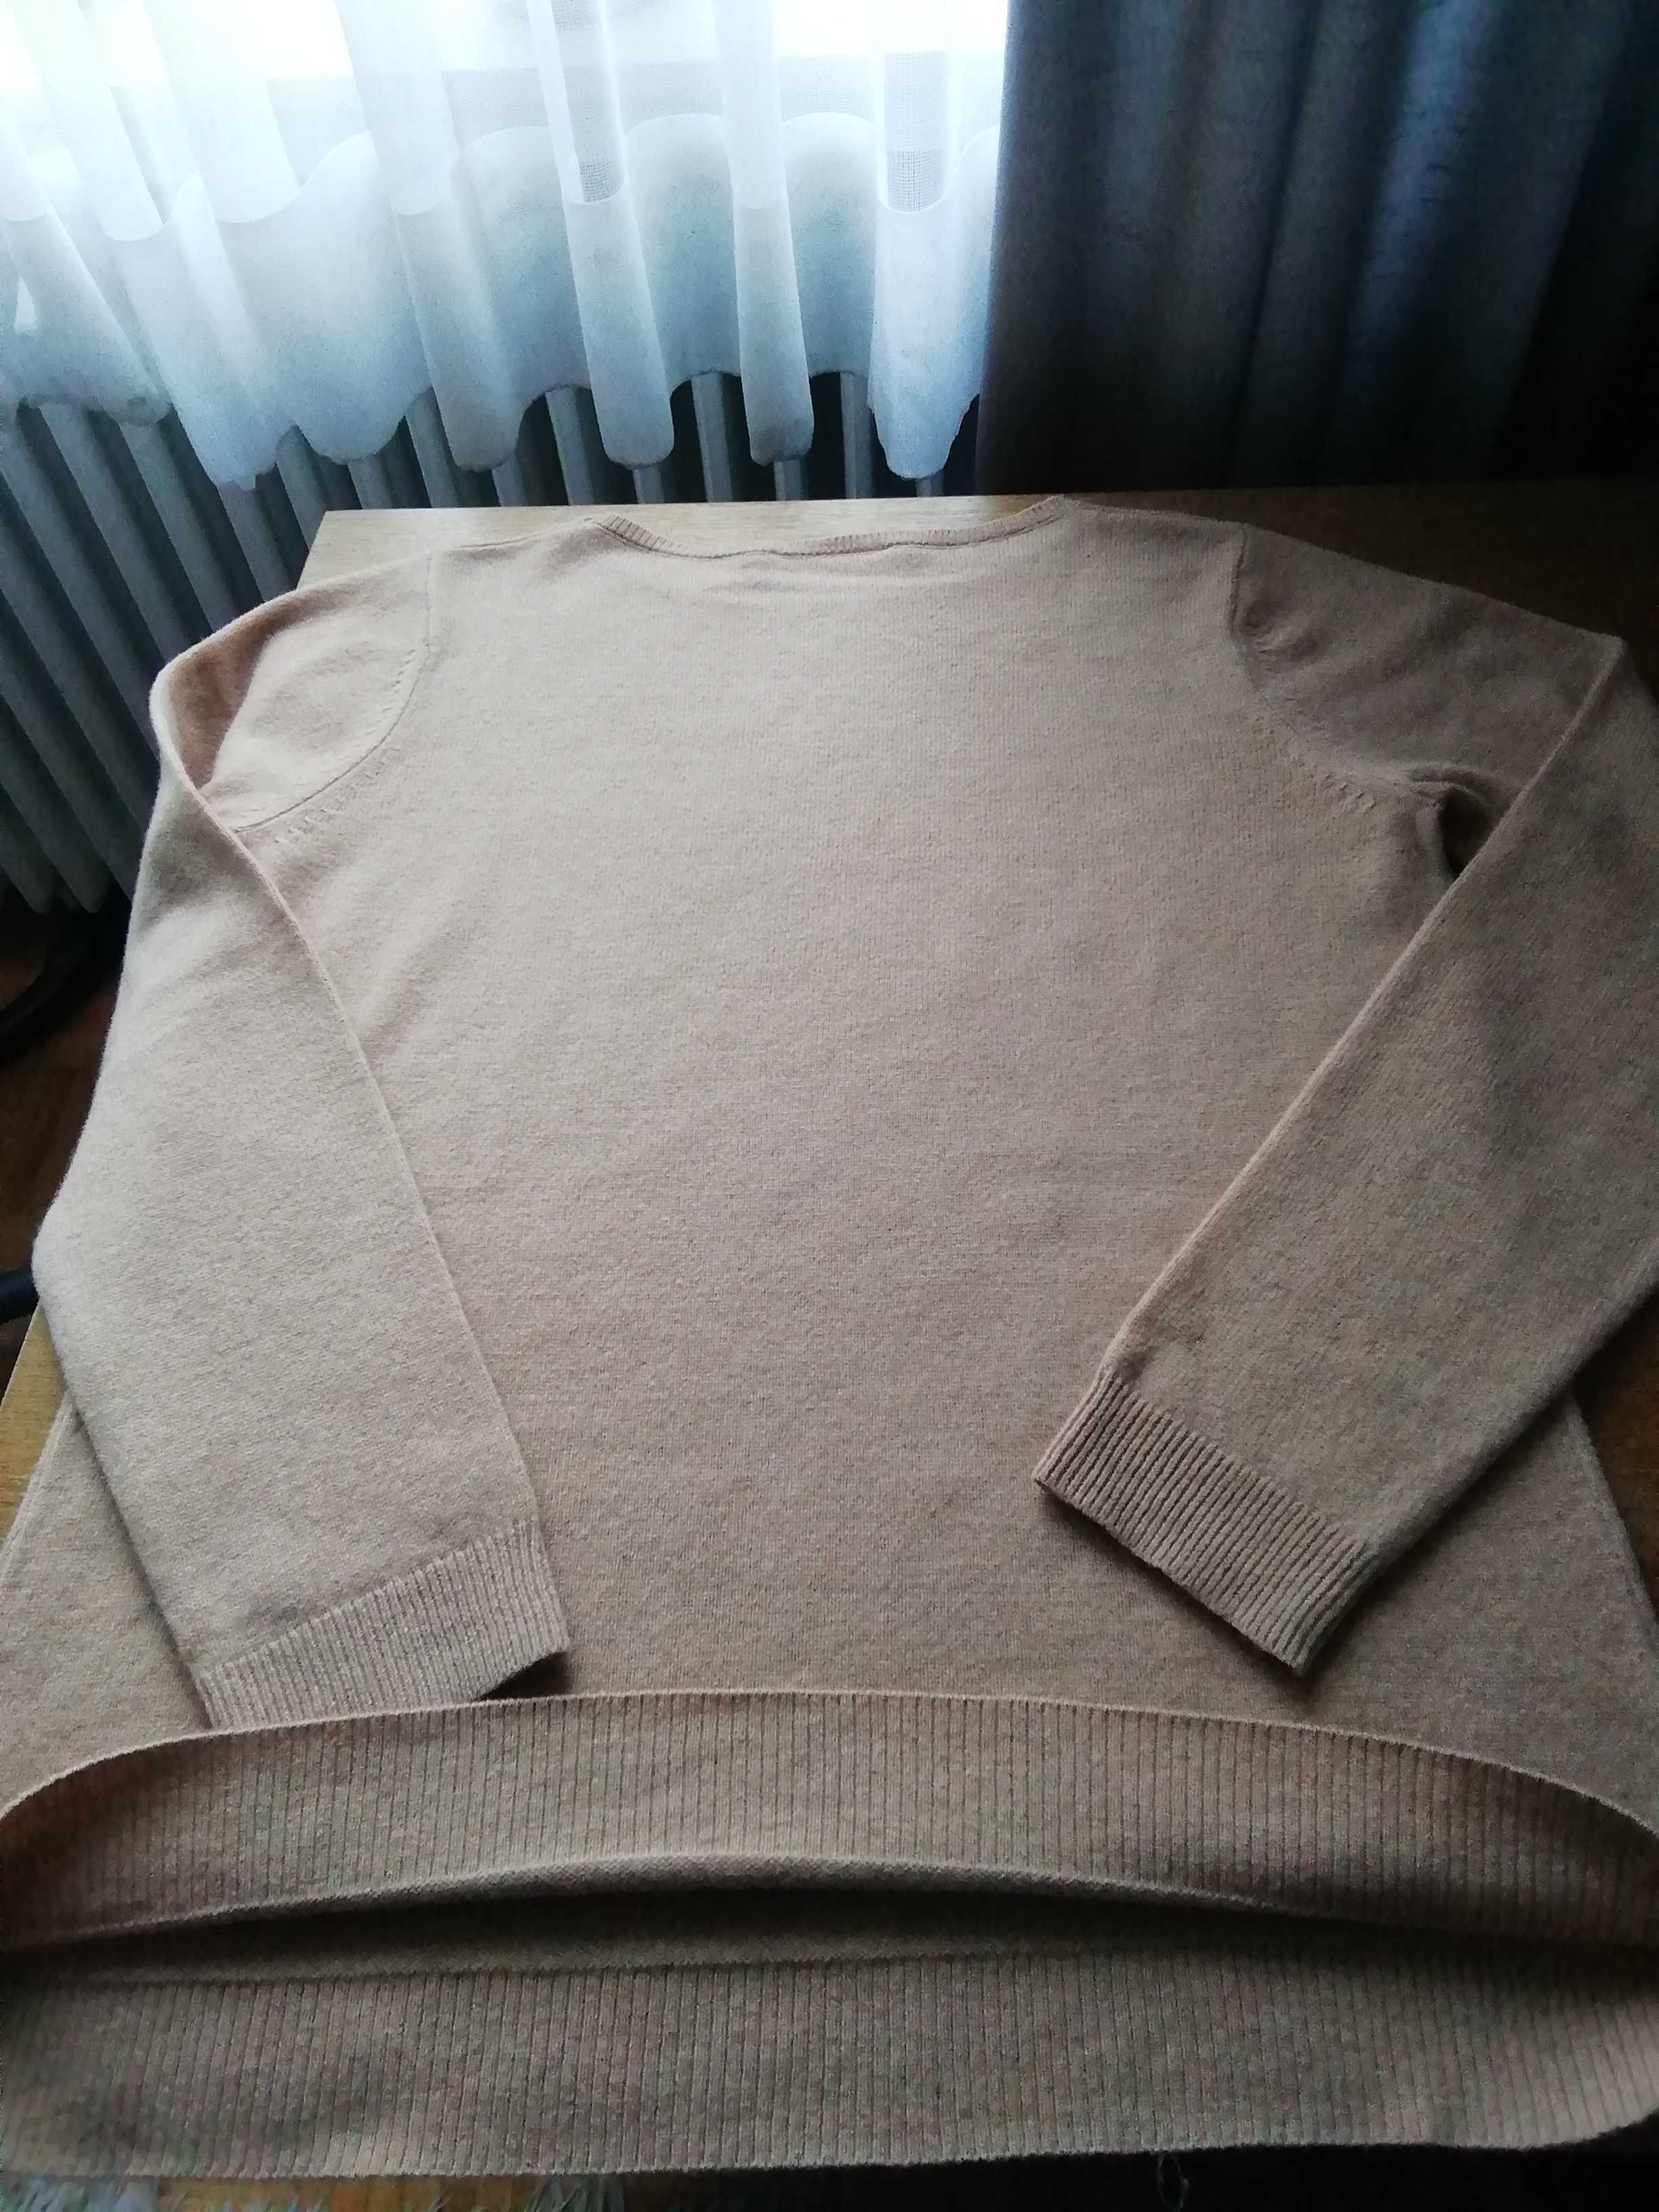 Damski sweter MARK |ADAM - 90% wełny